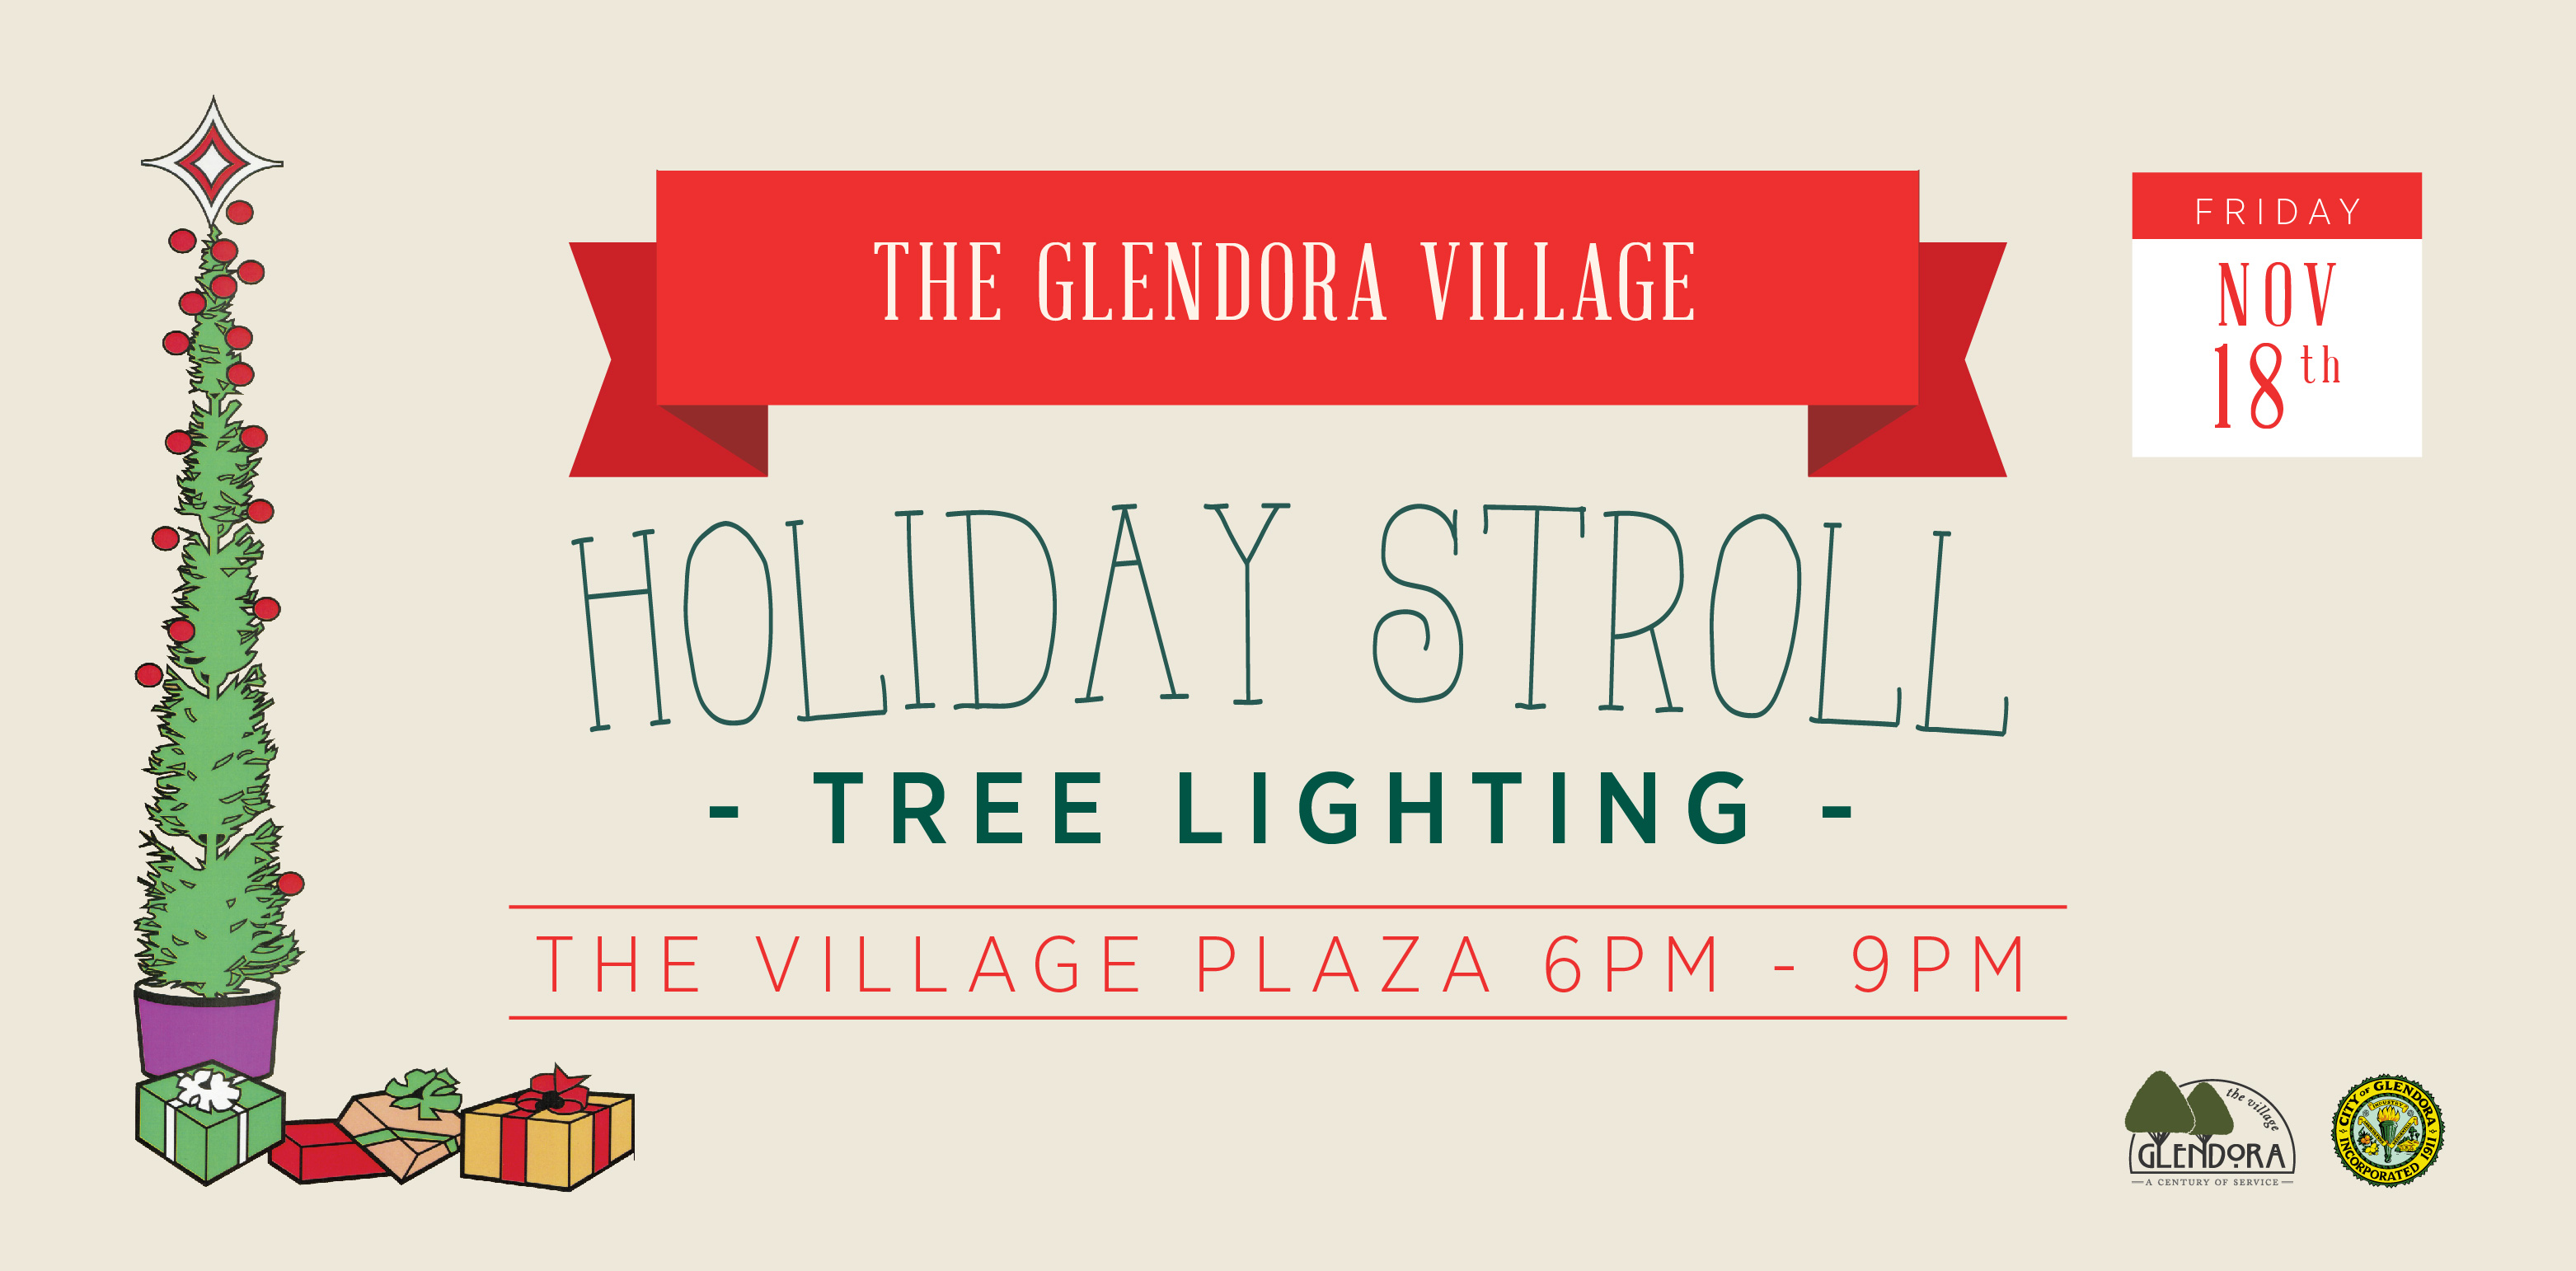 Glendora Village Annual Holiday Stroll